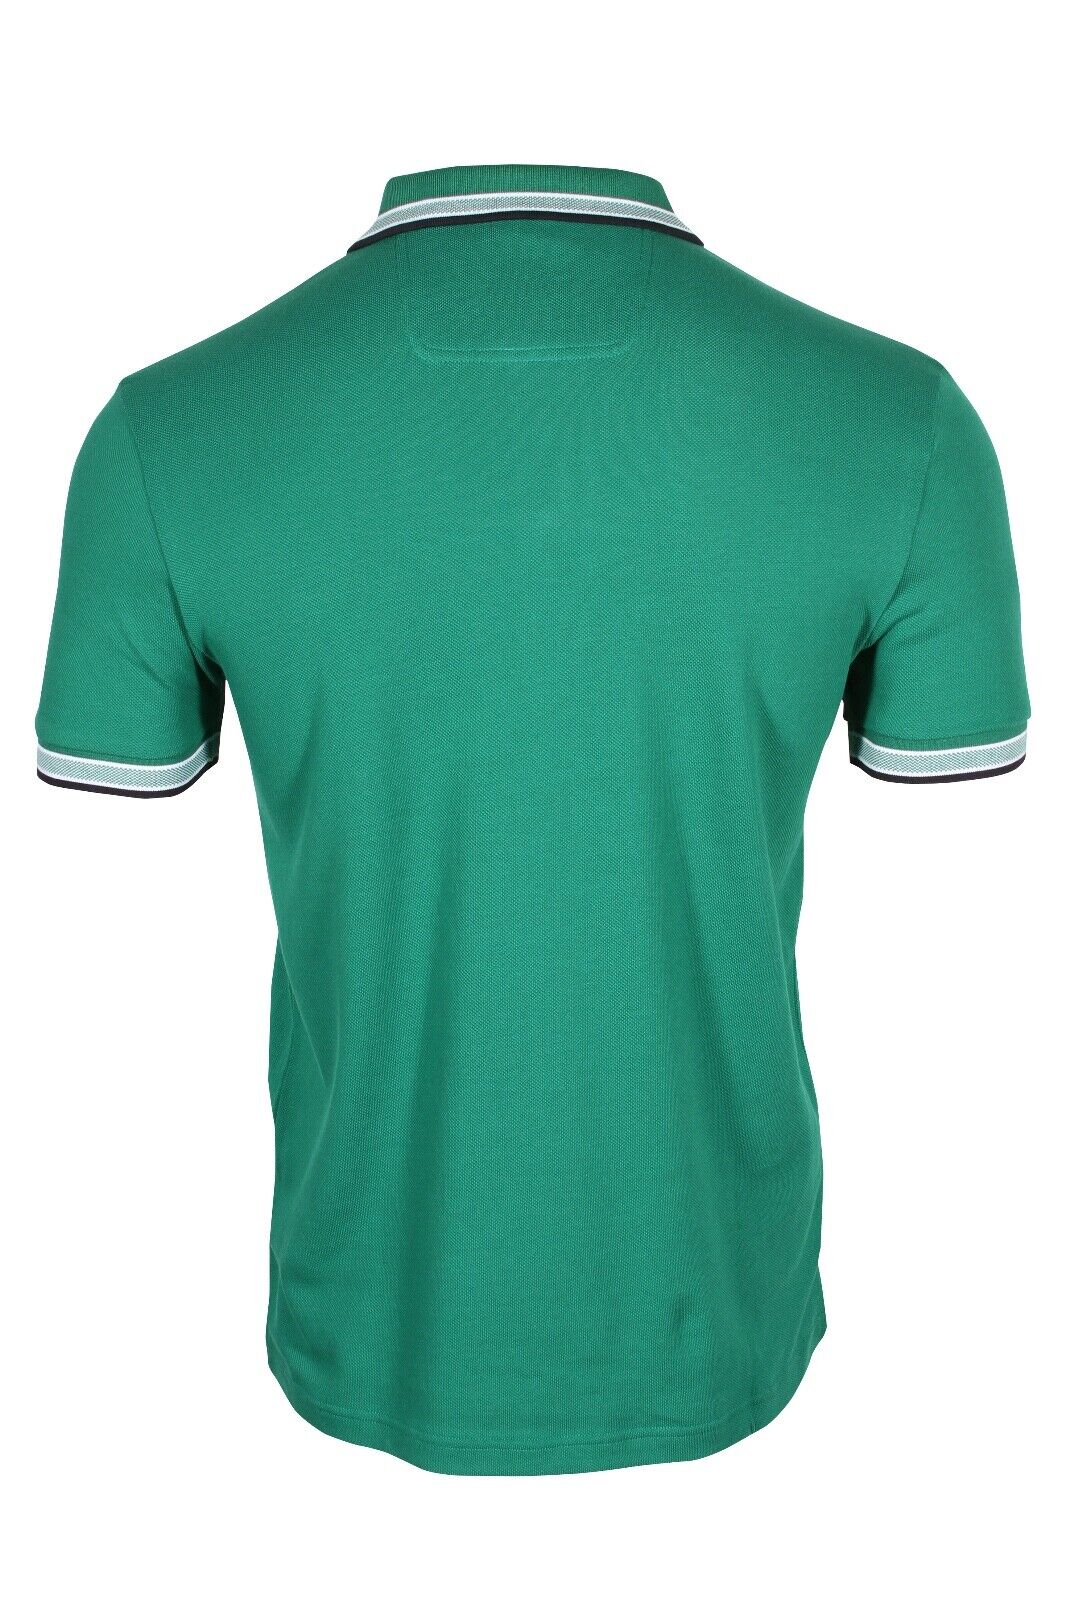 HUGO BOSS Paddy Men’s Cotton Polo Shirt With Logo in Dark Green 50468983-309